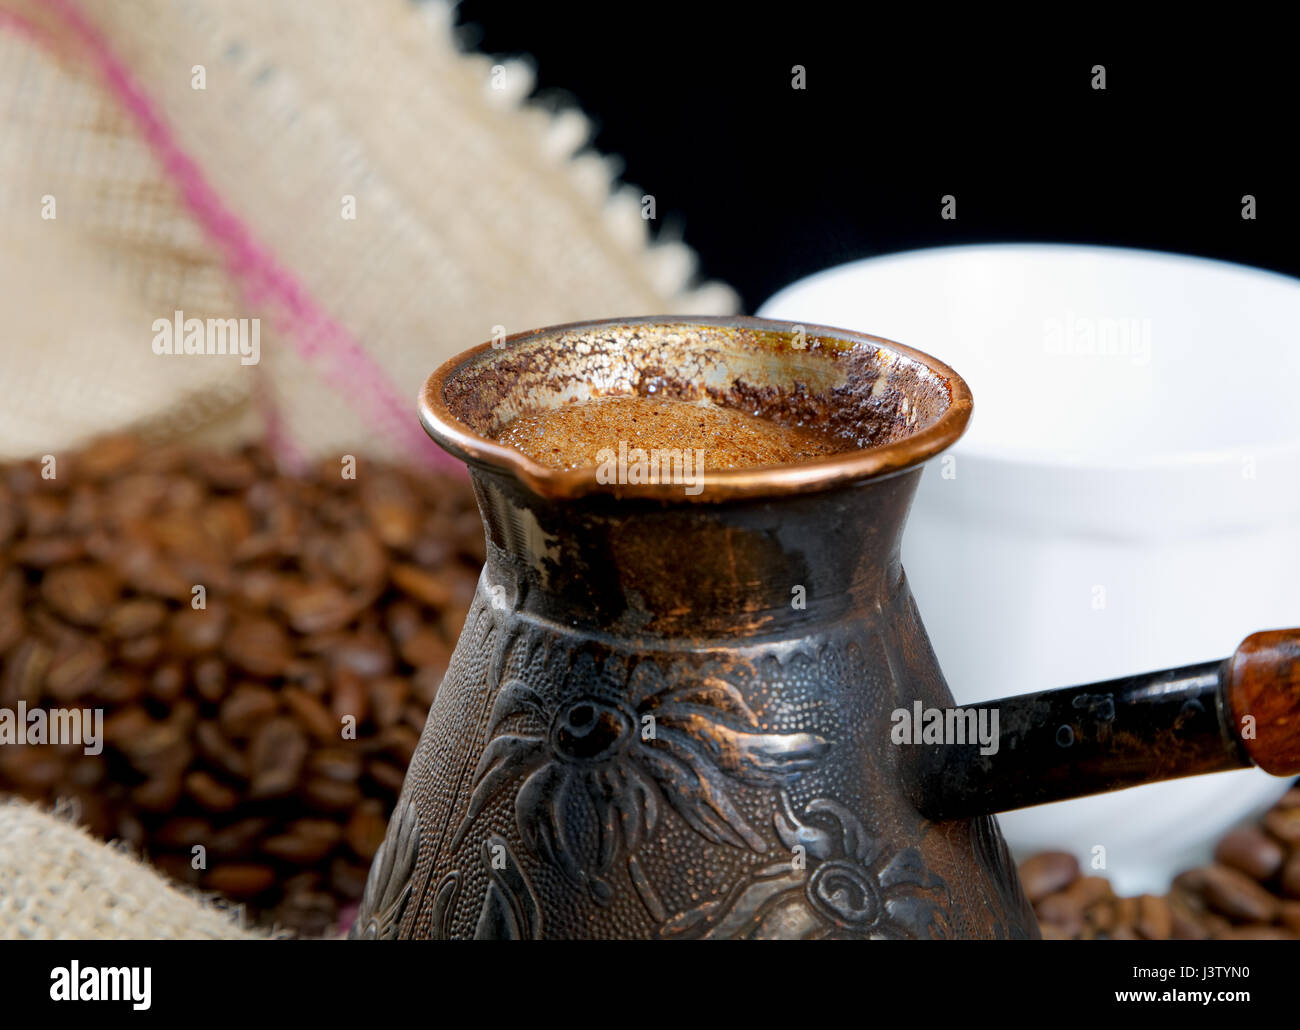 https://c8.alamy.com/comp/J3TYN0/turka-with-coffee-on-the-table-next-to-coffee-beans-J3TYN0.jpg